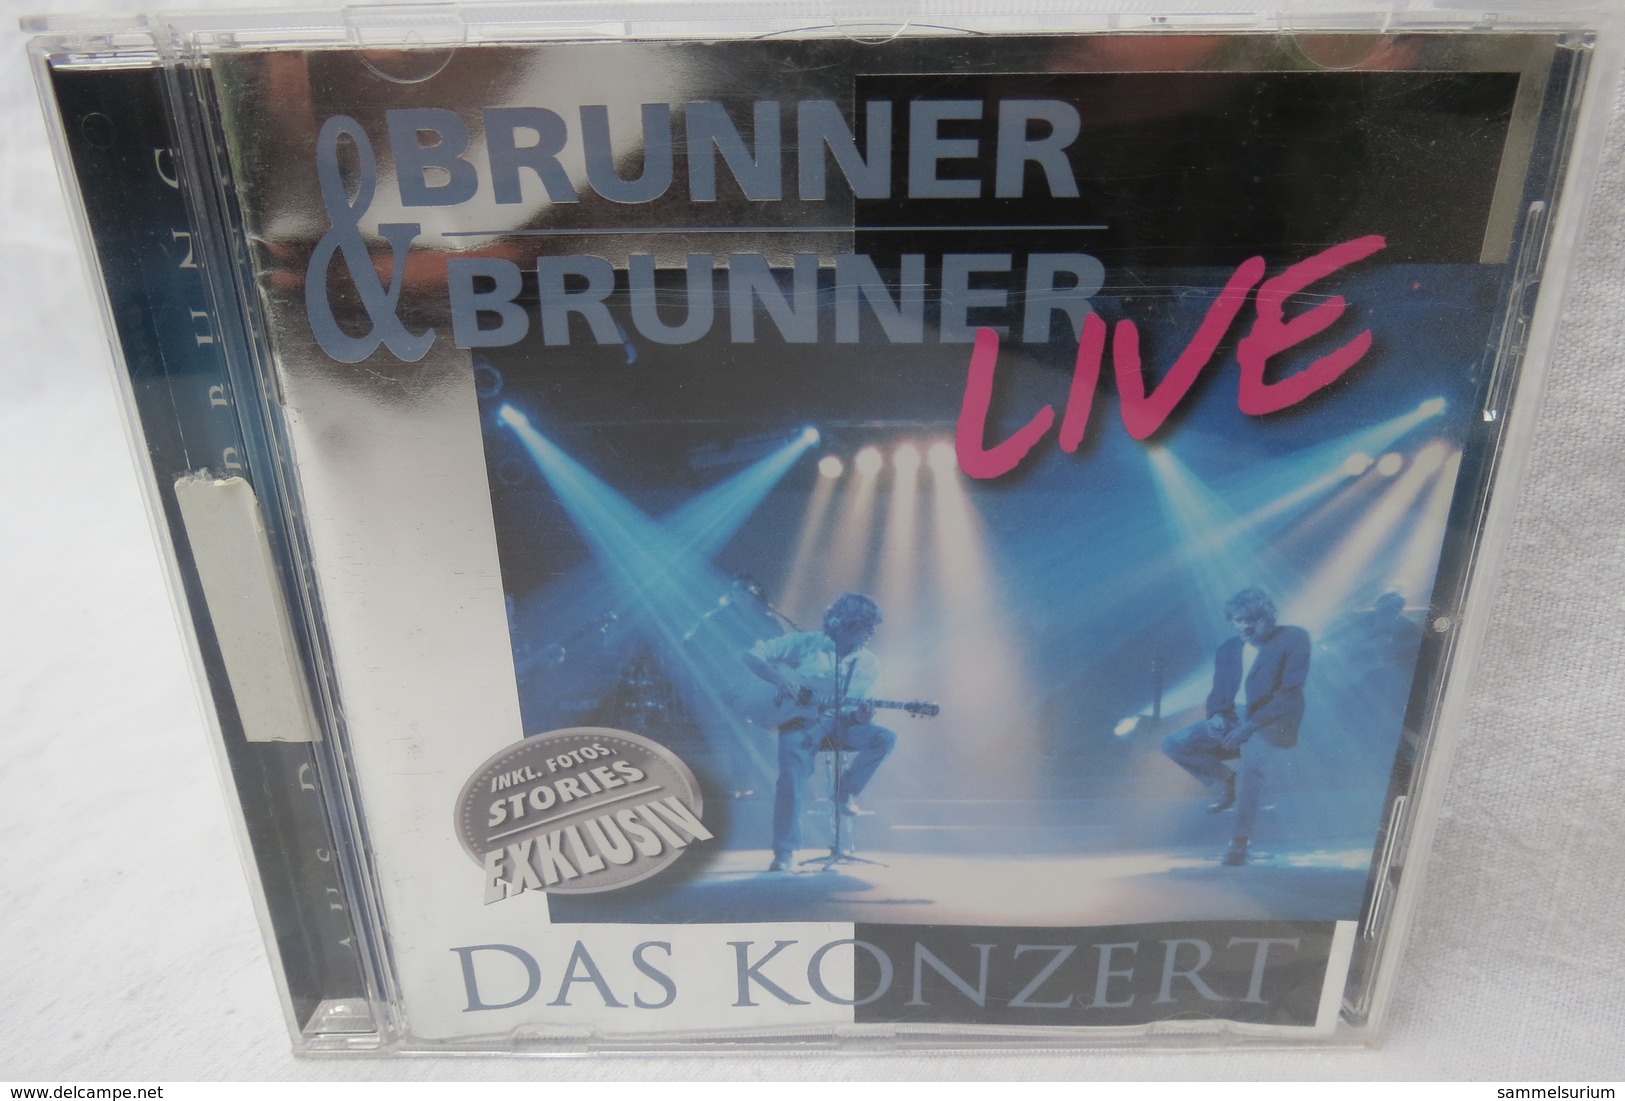 CD "Brunner & Brunner" Das Konzert, Live - Other - German Music